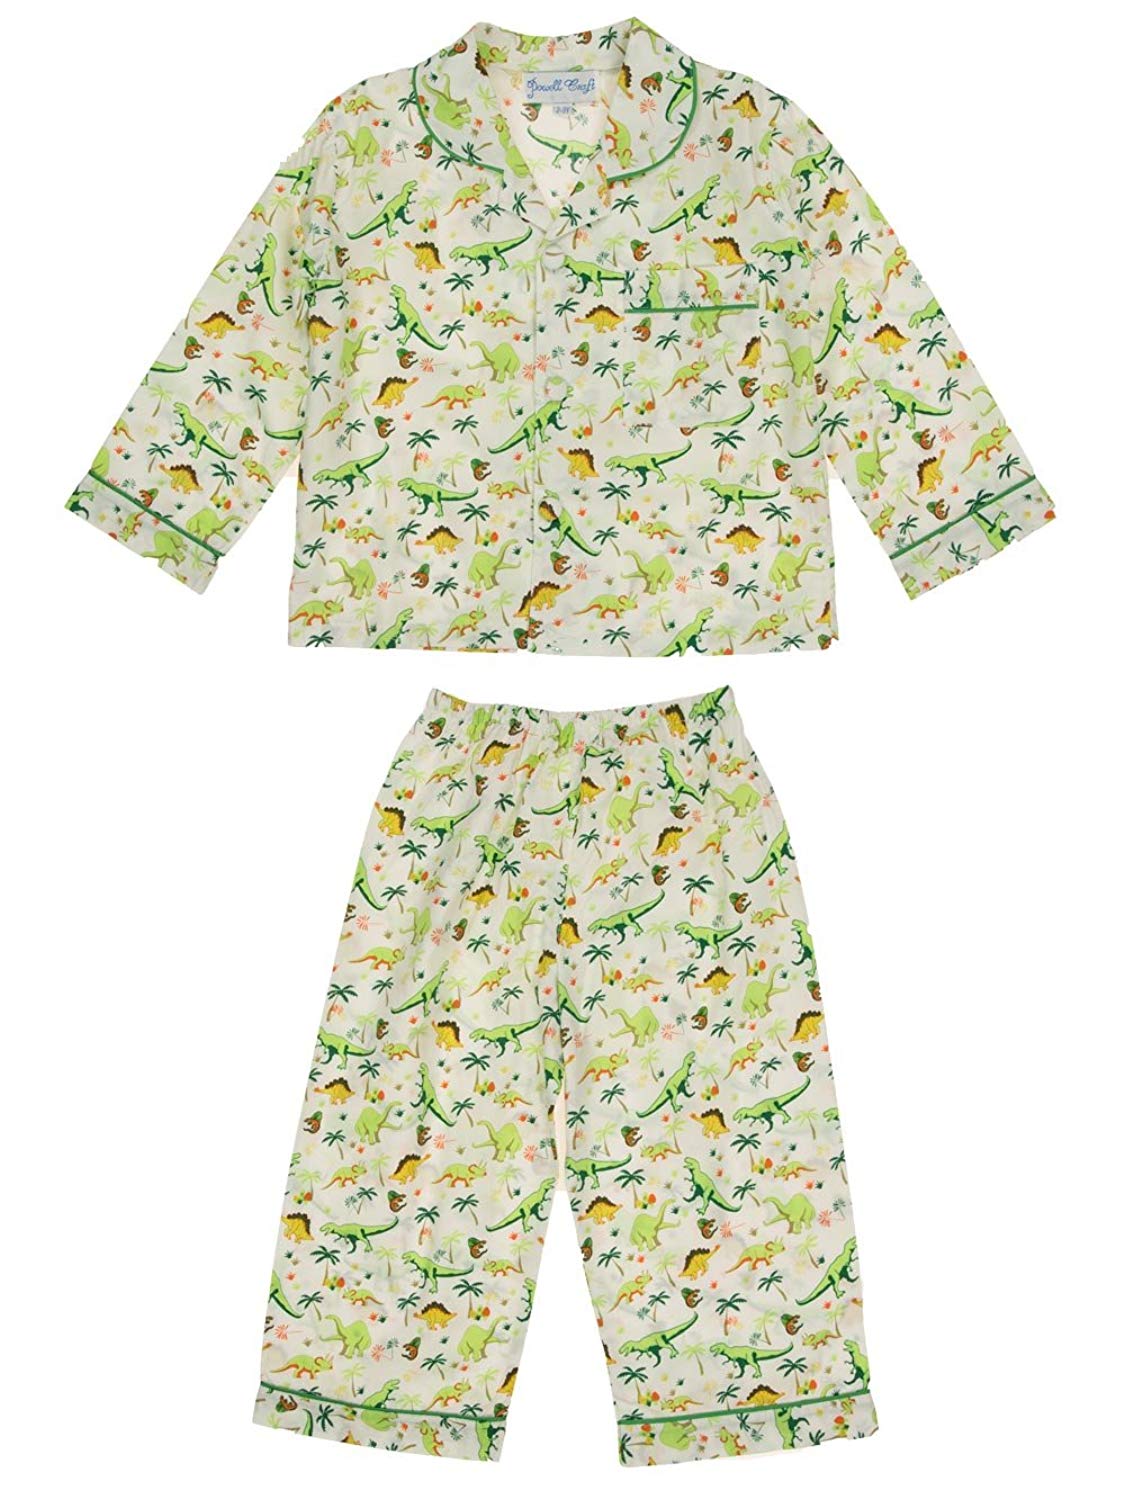 Powell Craft Boys Pyjamas - Dinosaur design 6-7yrs - hanrattycraftsgifts.co.uk